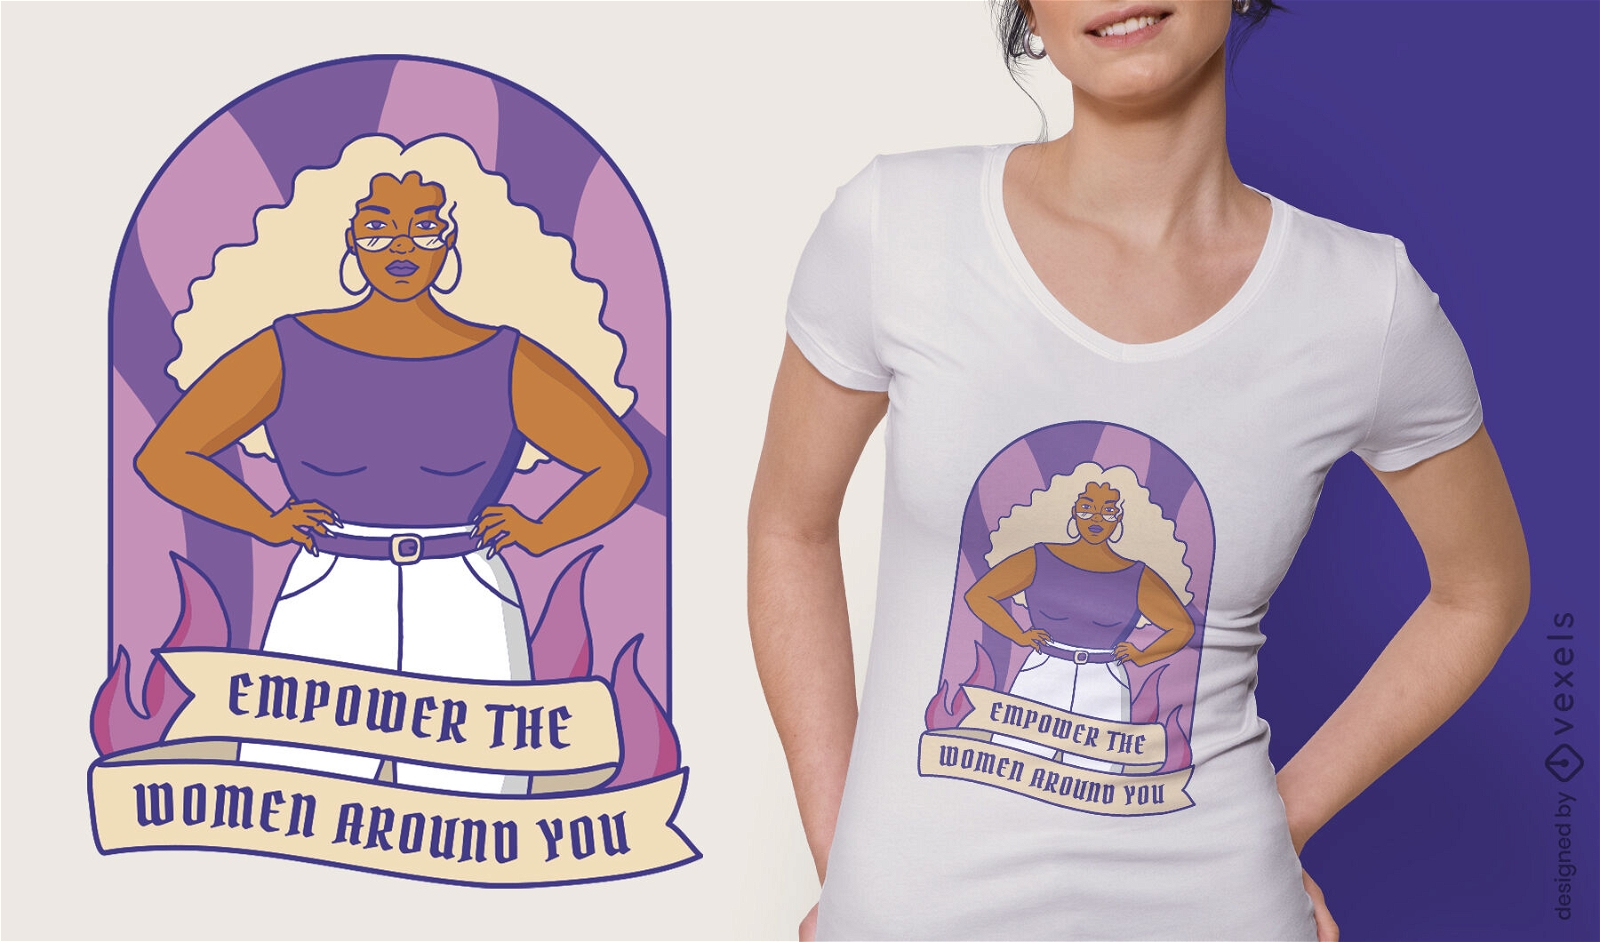 Powerful strong woman t-shirt design